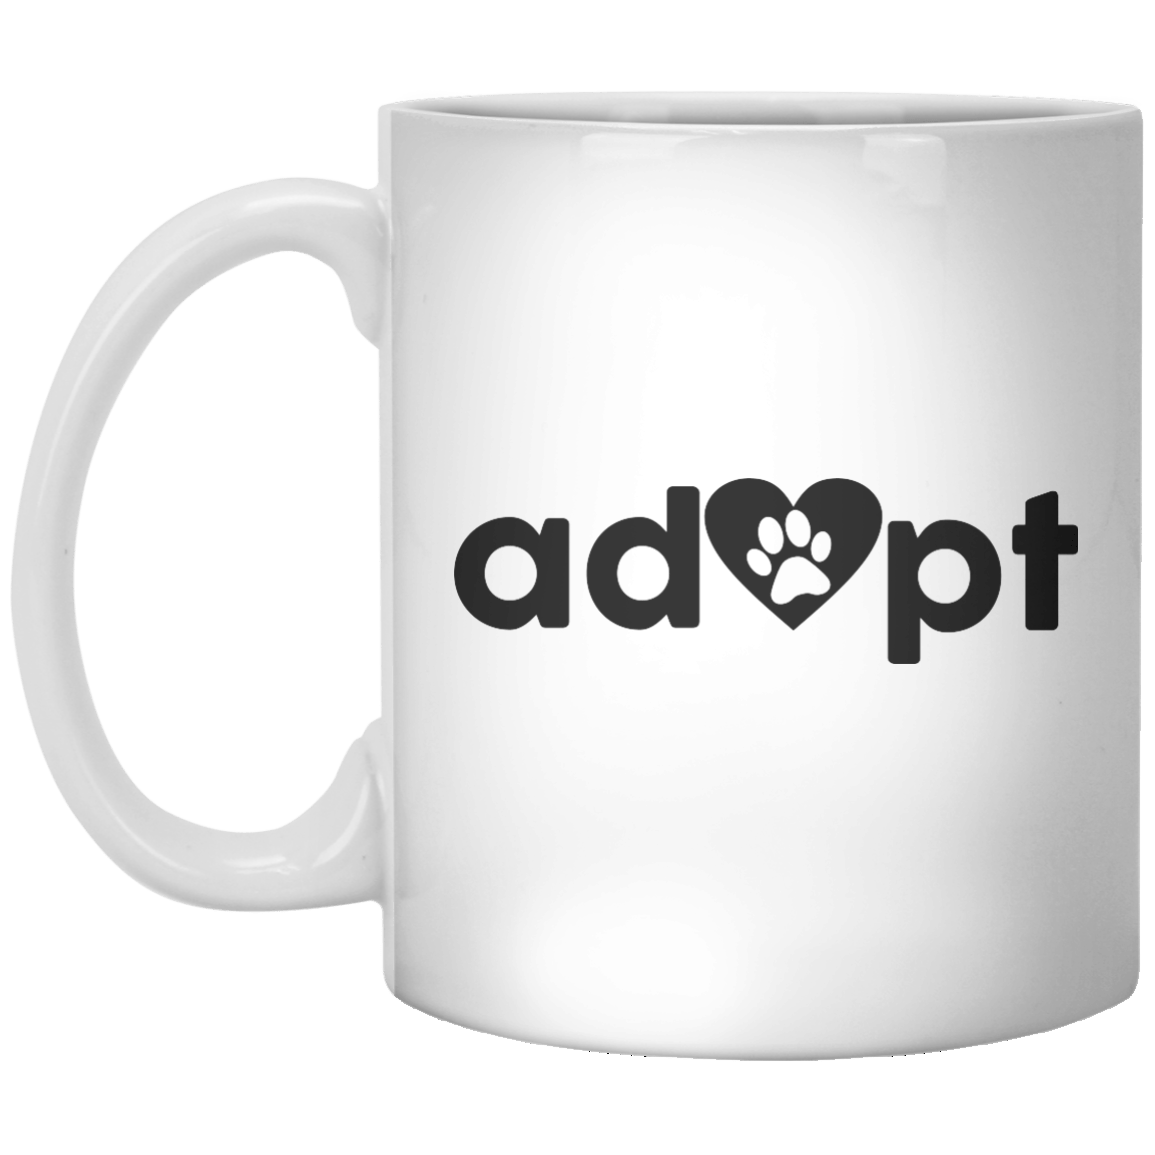 Adopt - Shirtoopia